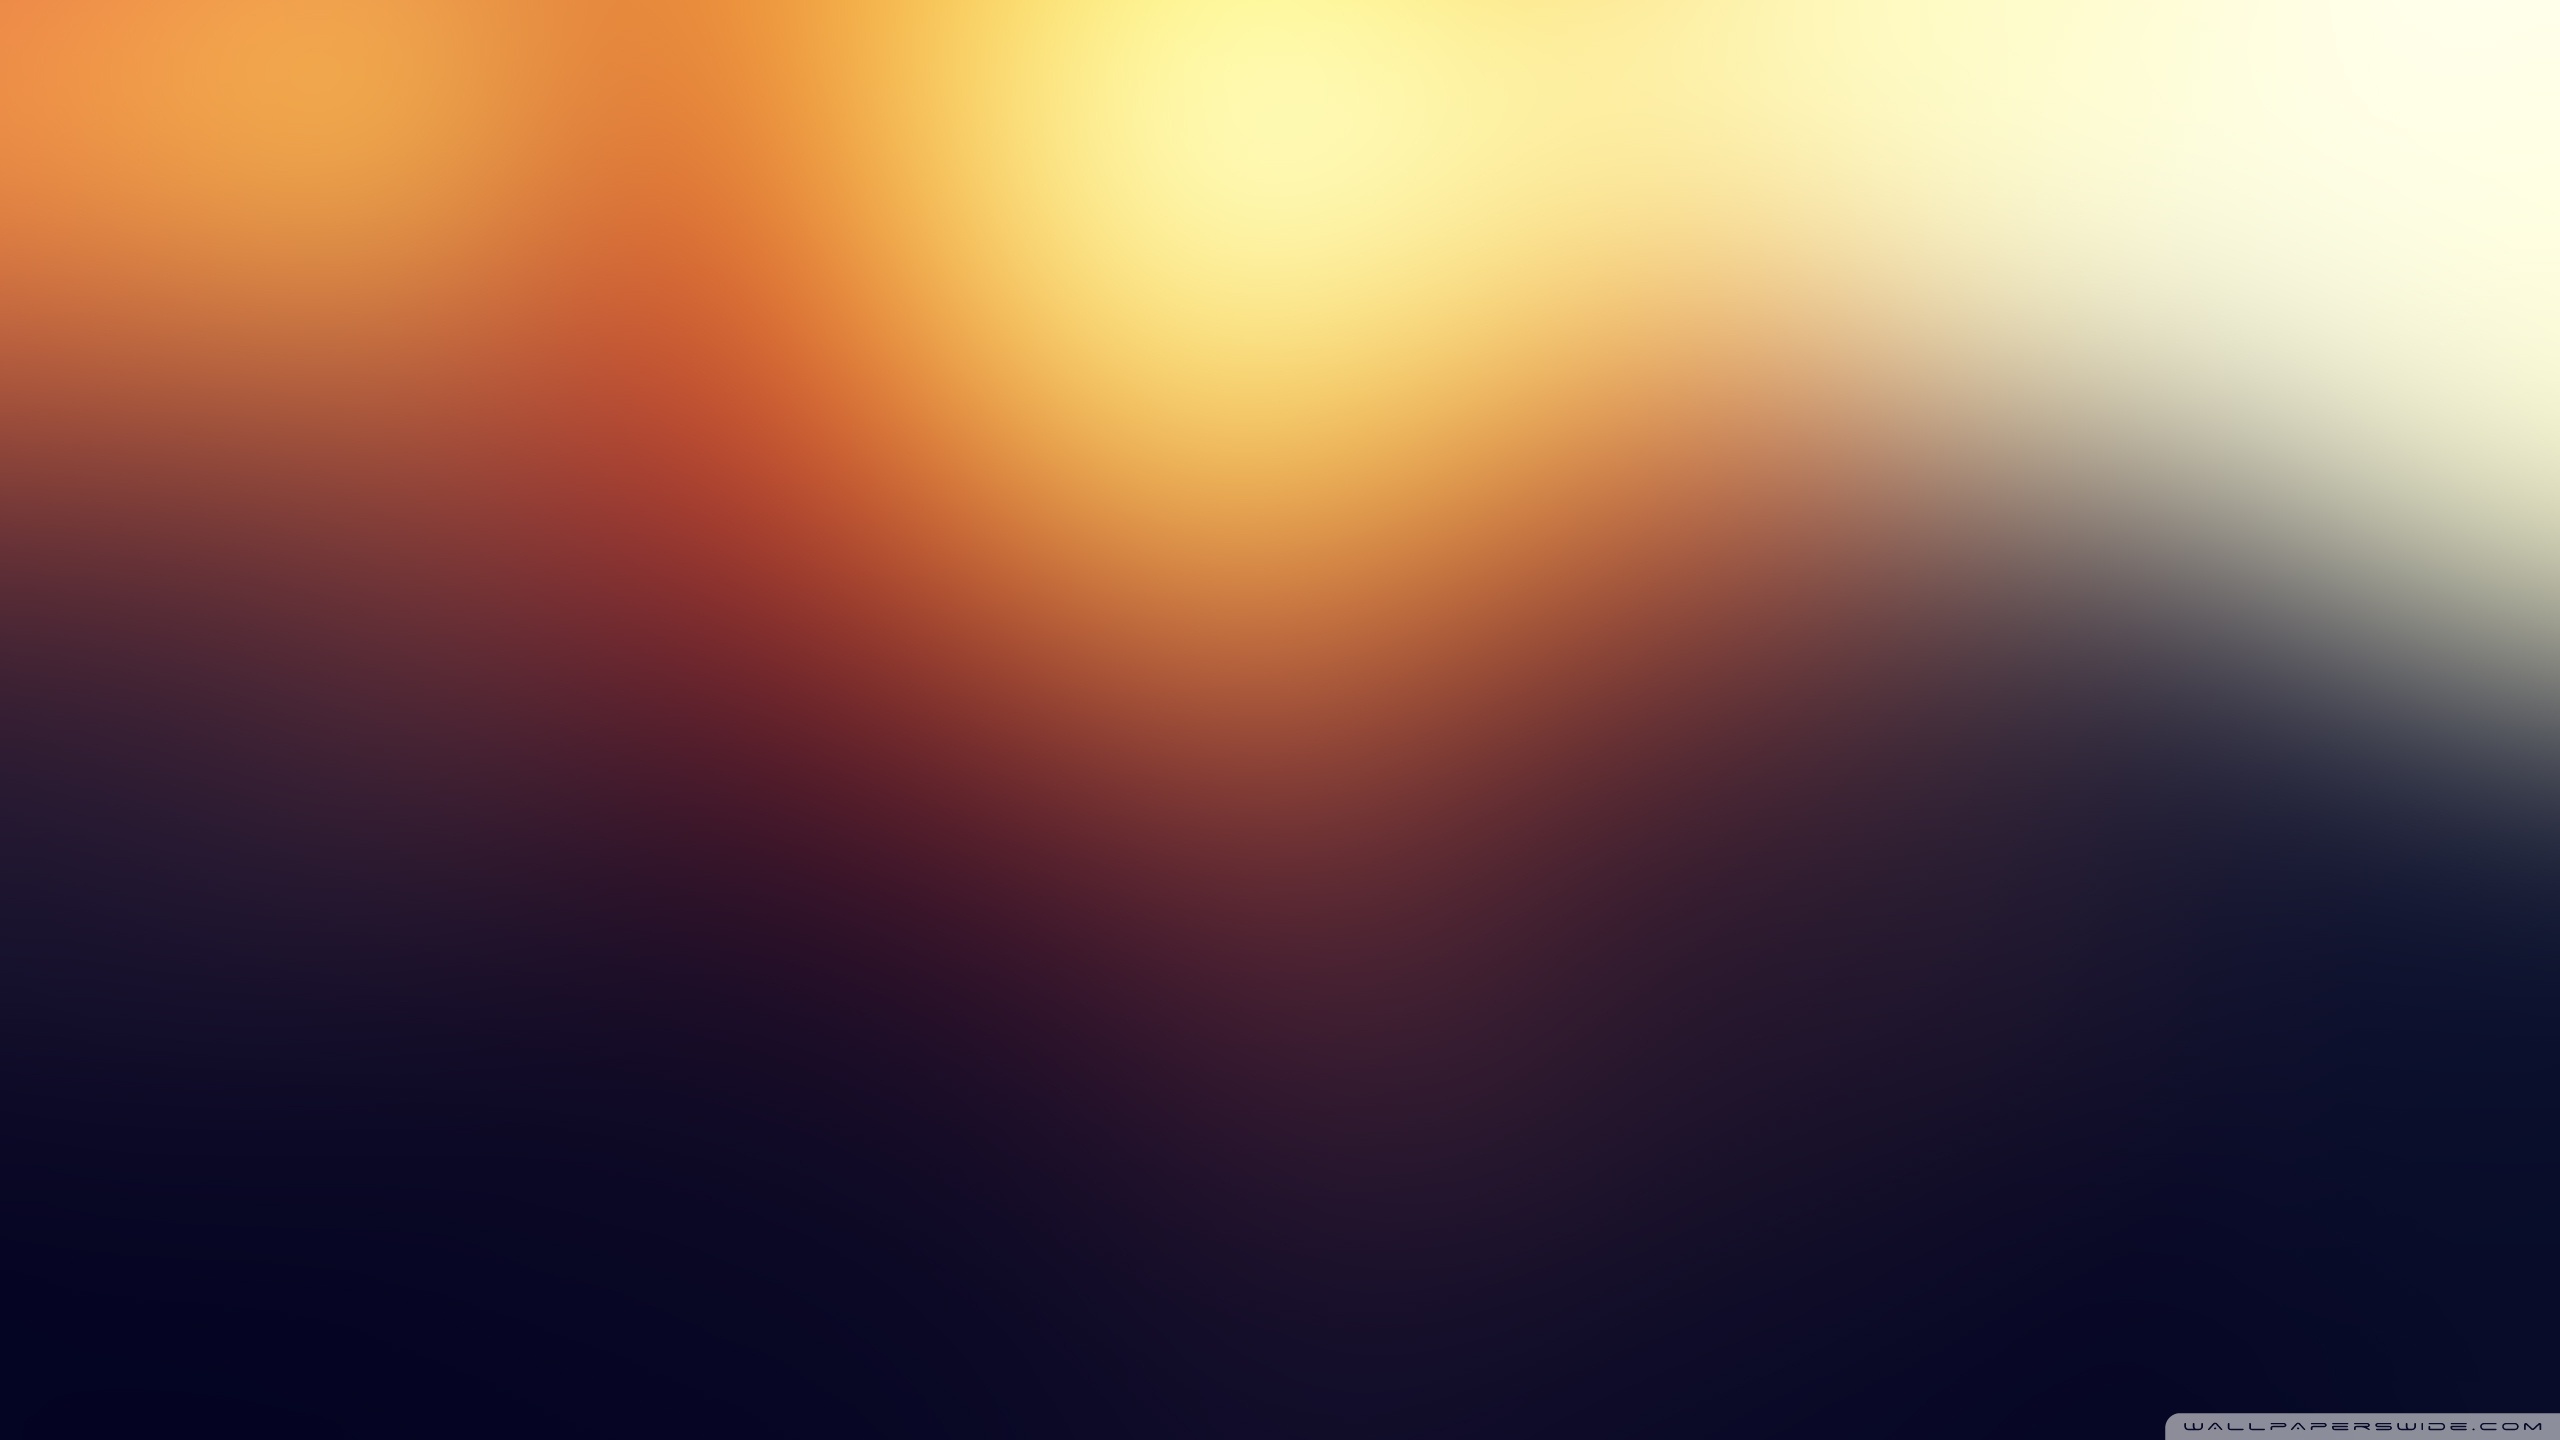 Wallpapers Andorid Minimalist Blurry Sunset Hd High Definition ...